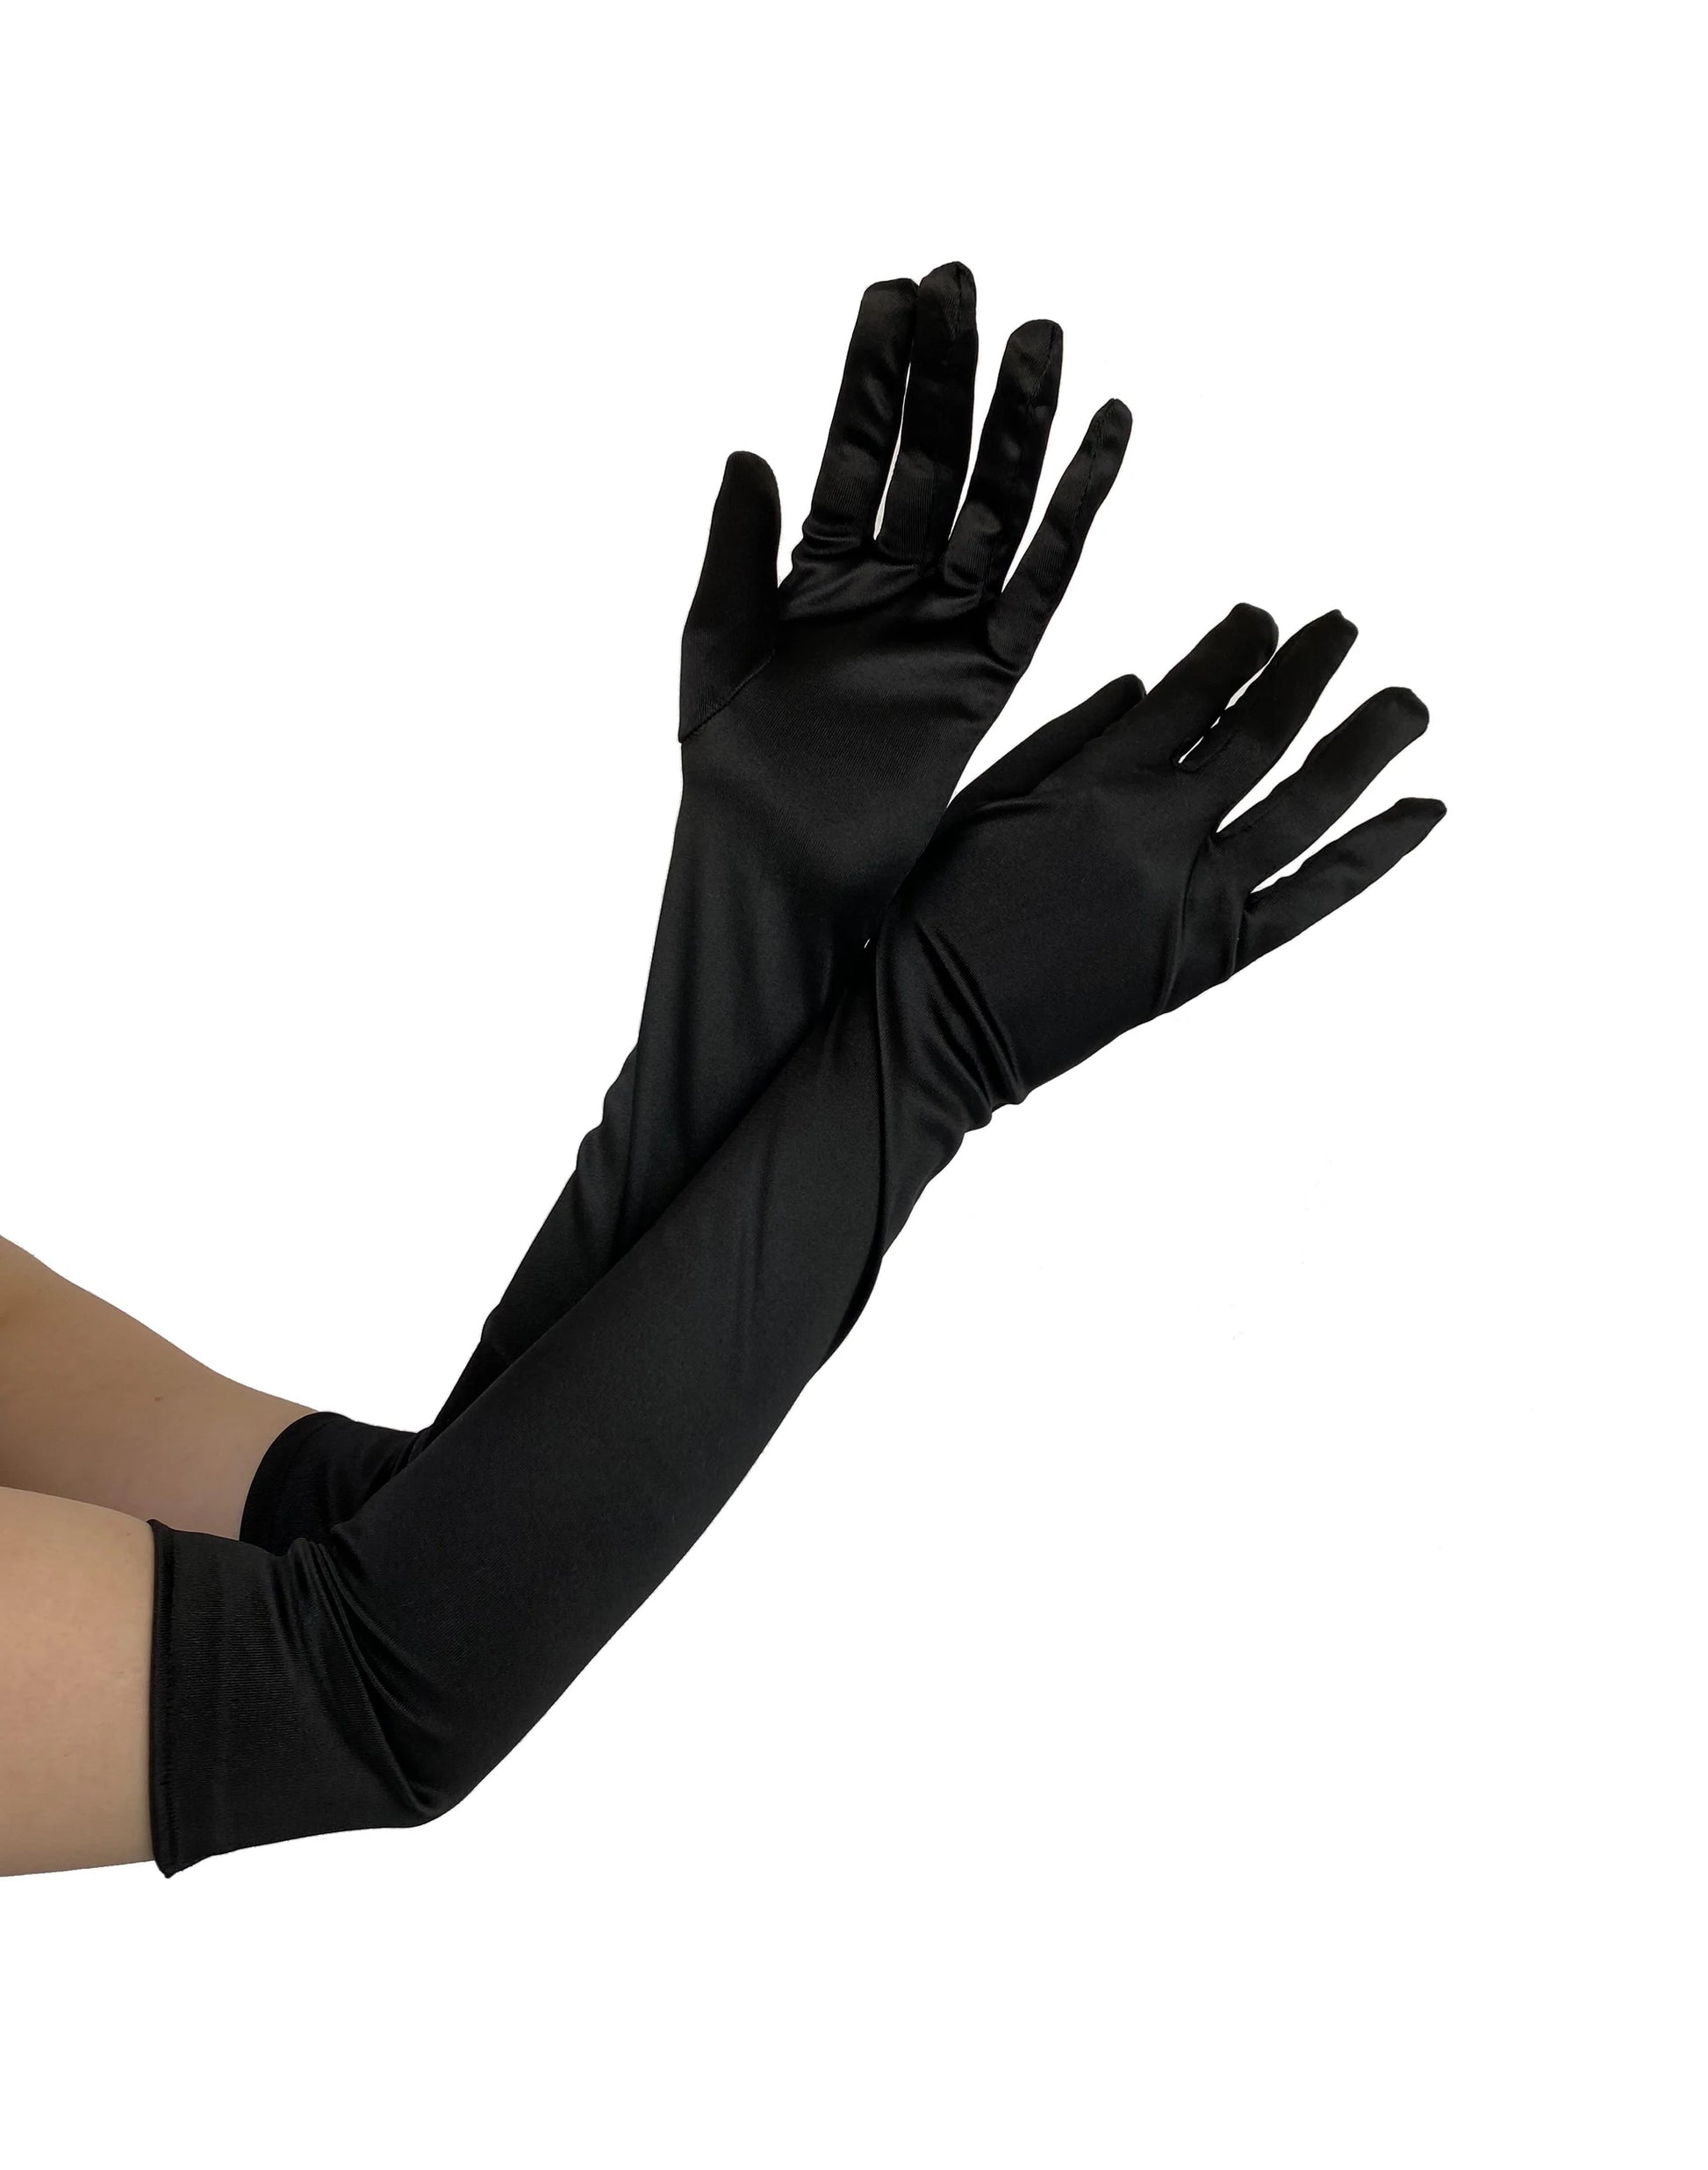 Pamela Mann Plain Satin Gloves - Black long above the elbow opera gloves made of glossy stretch satin.